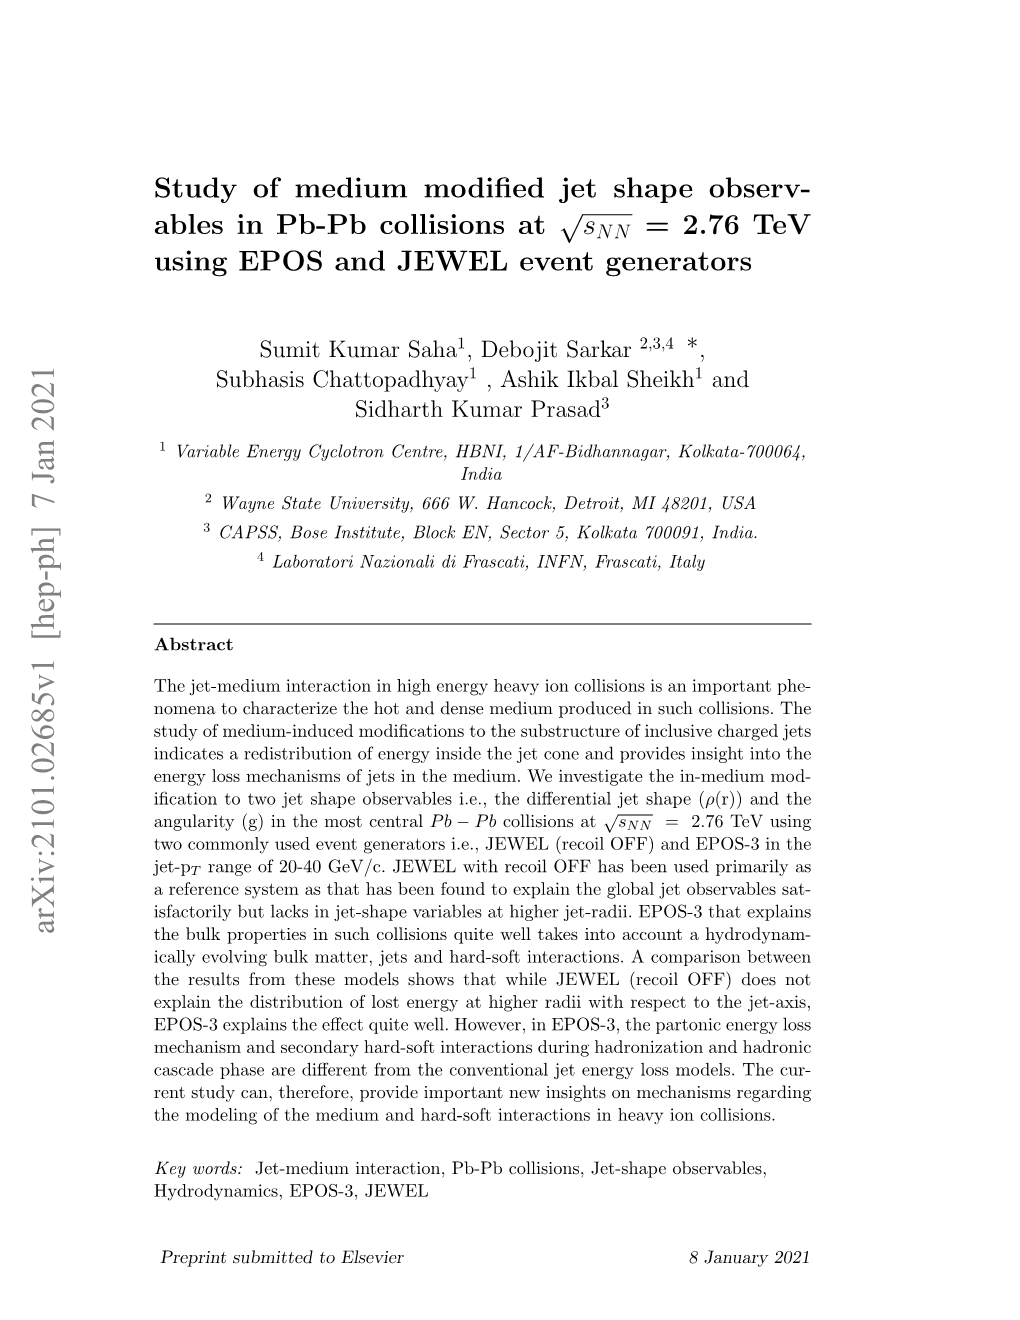 Study of Medium Modified Jet Shape Observ